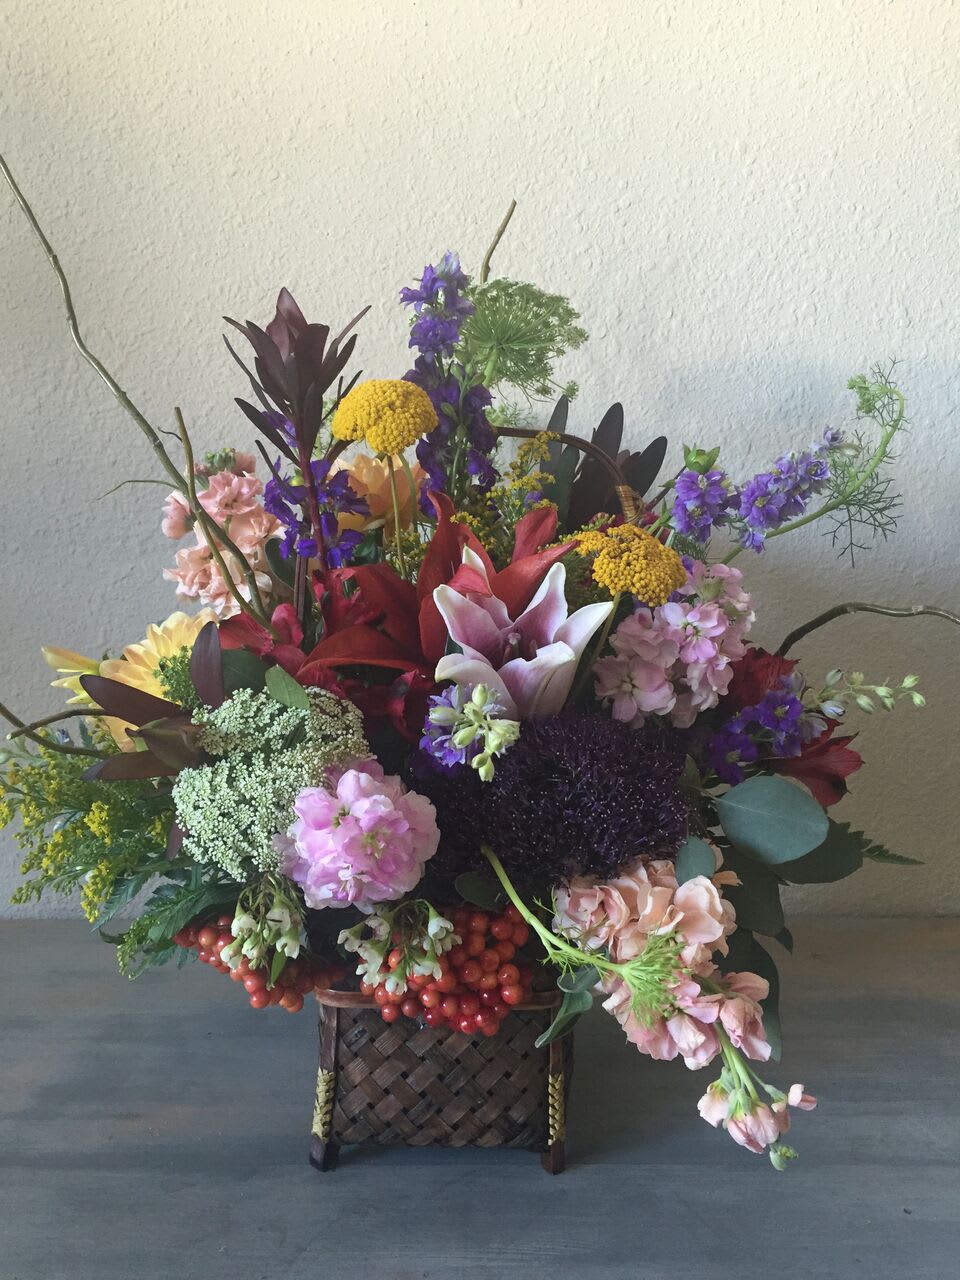 Mixture of garden flowers in cute basket.  